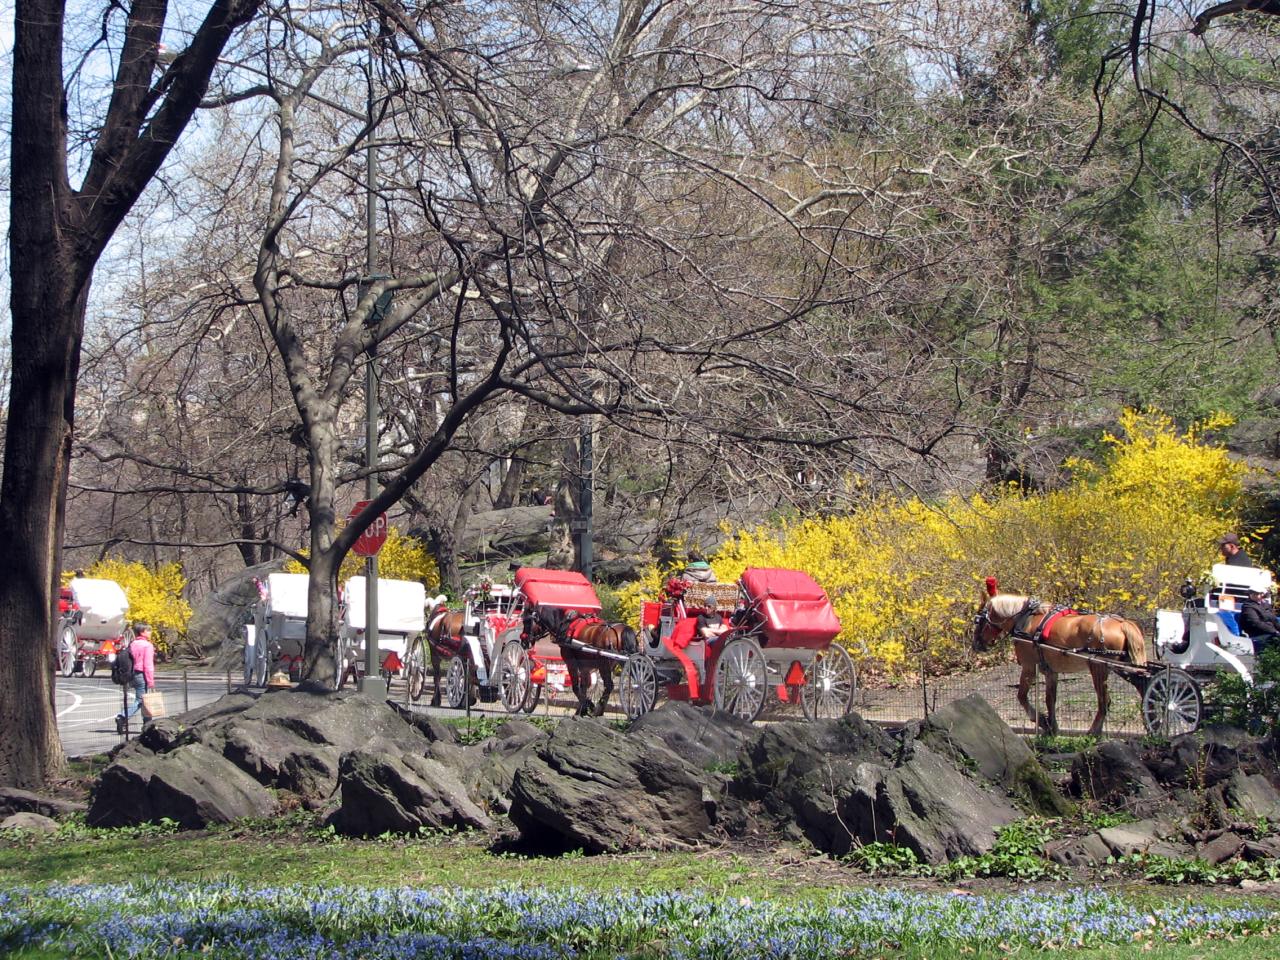 04.16.09 Central Park (18)